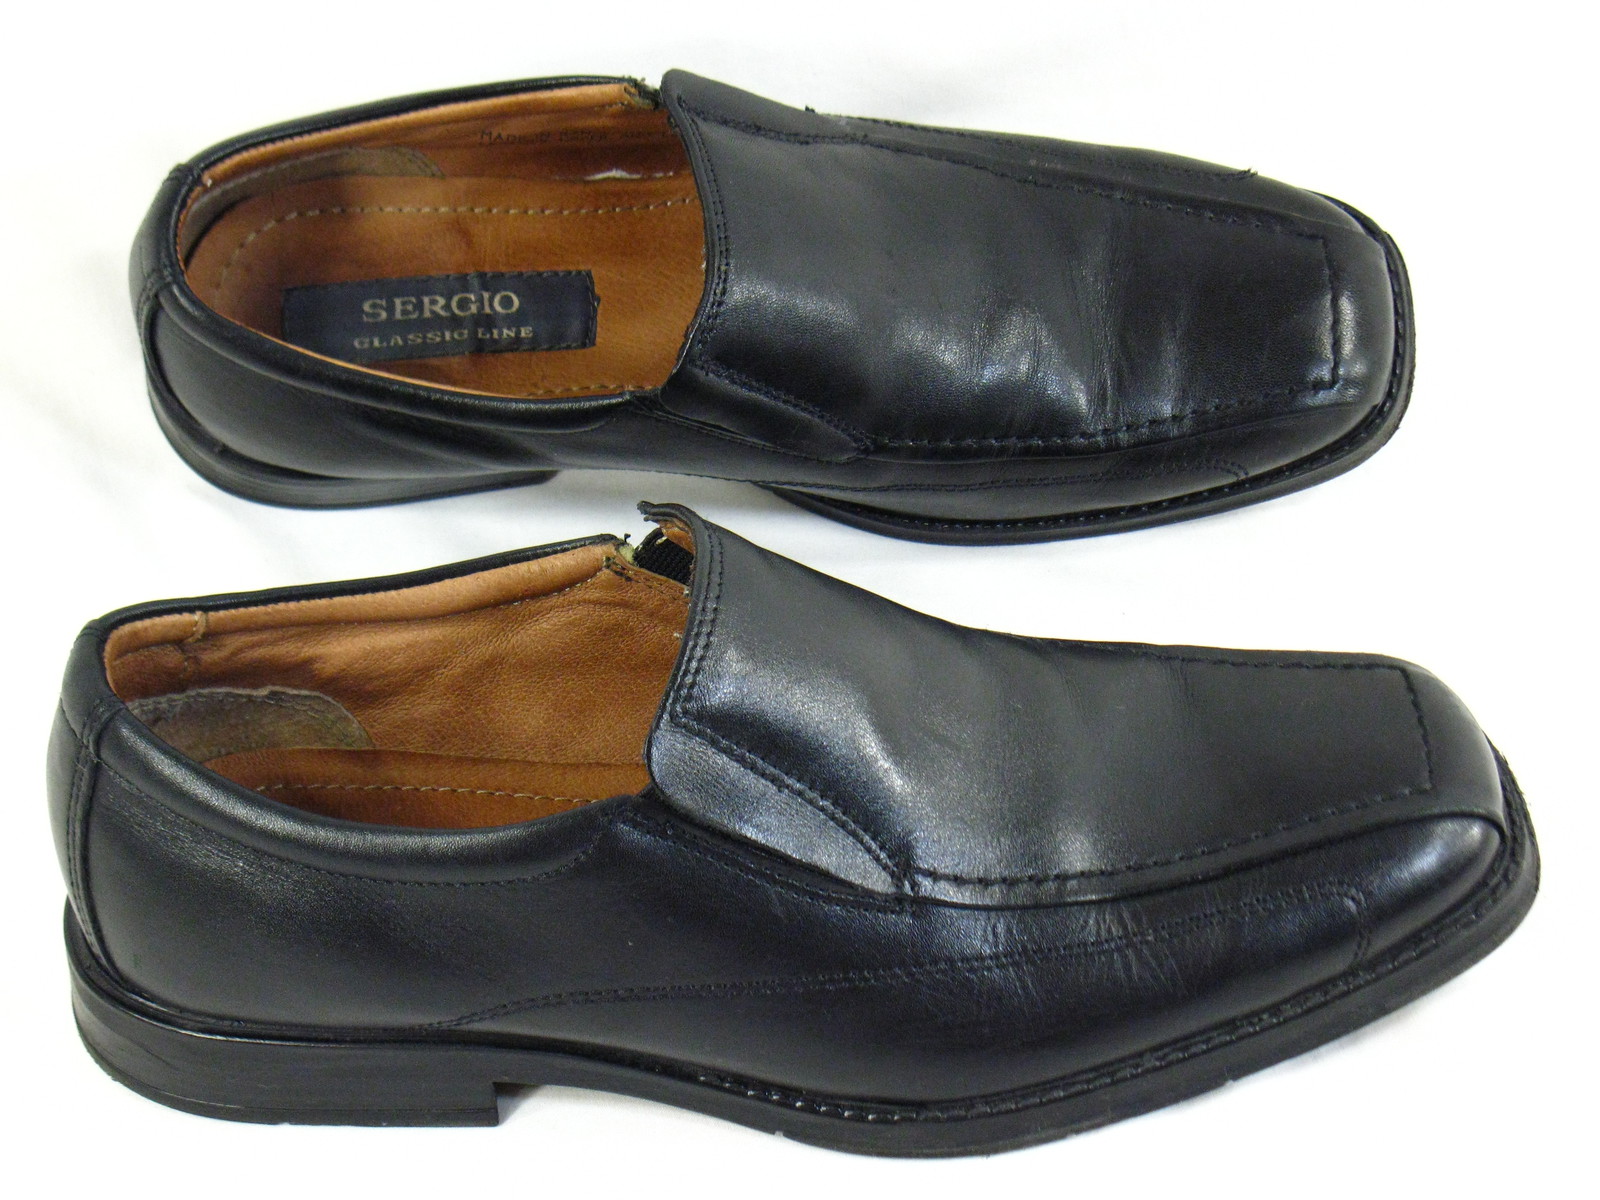 sergio classic line shoes